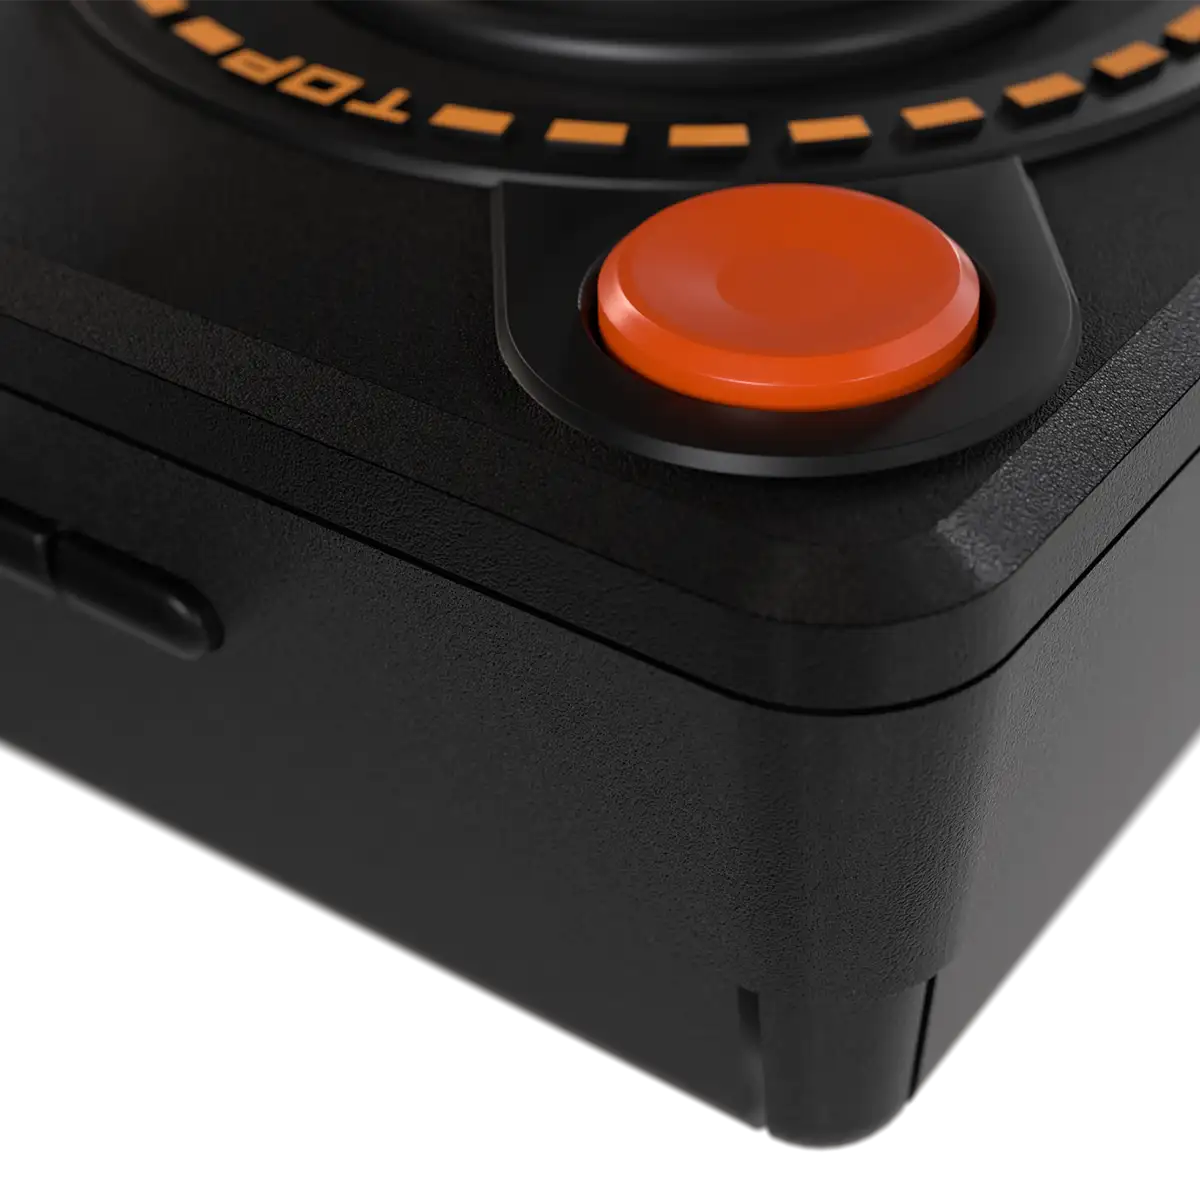 THECXSTICK (Solus Atari USB Joystick - Black) Thumbnail 7